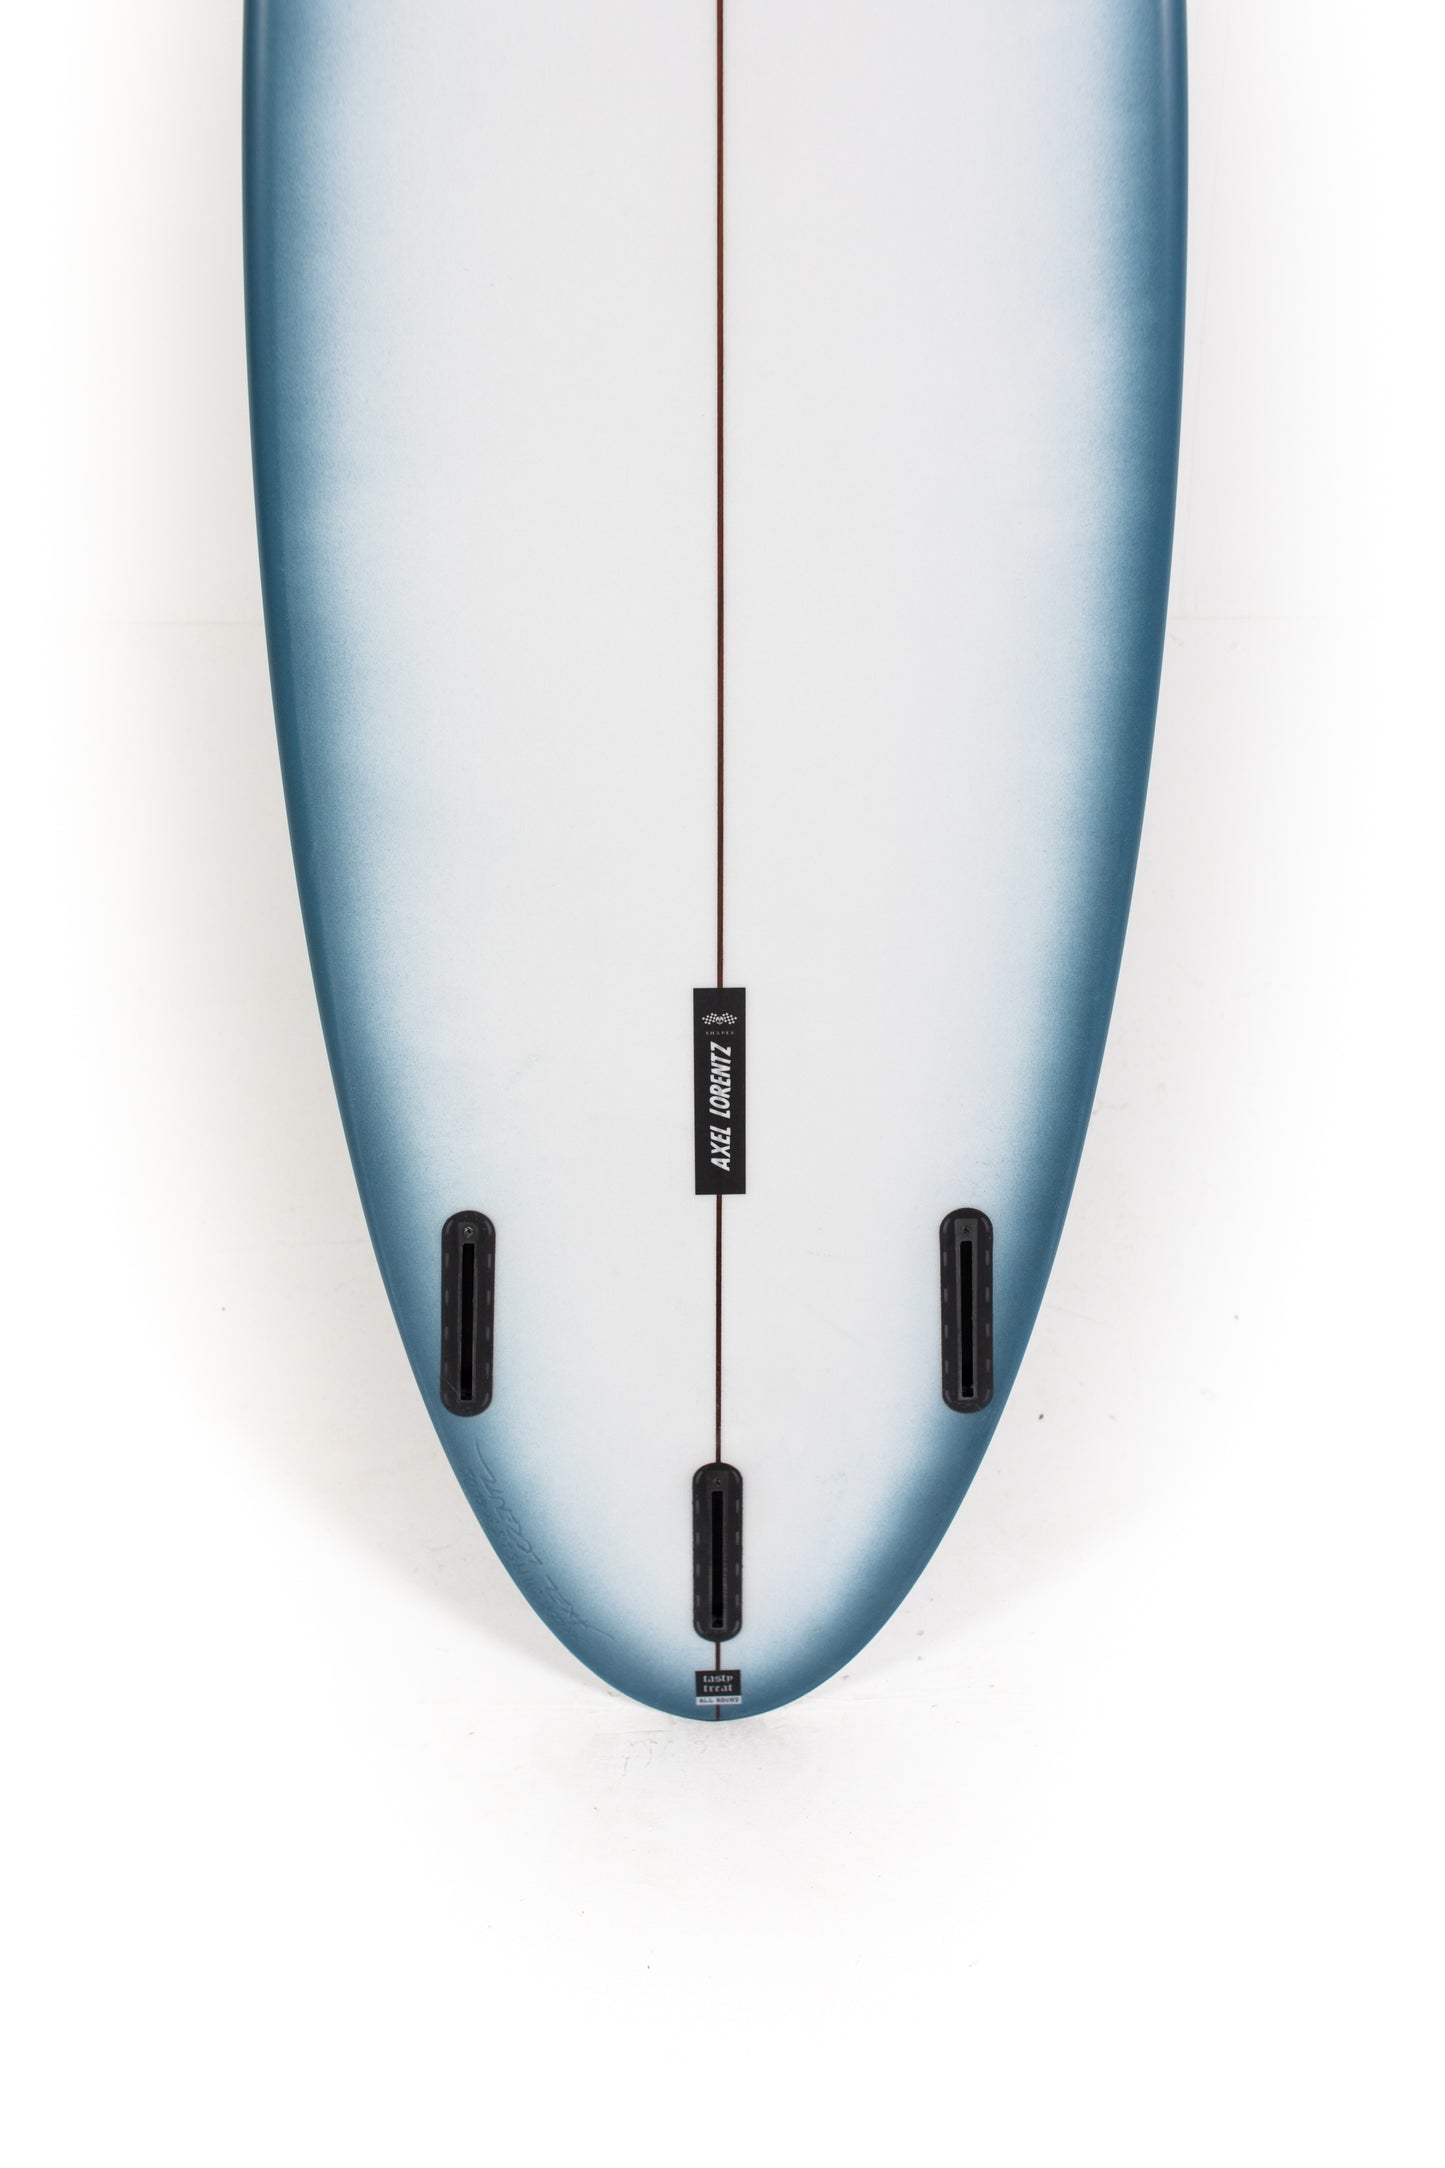 
                  
                    Pukas-Surf-Shop-Pukas-Surfboards-Ttar-Axel-Lorentz-5_11
                  
                